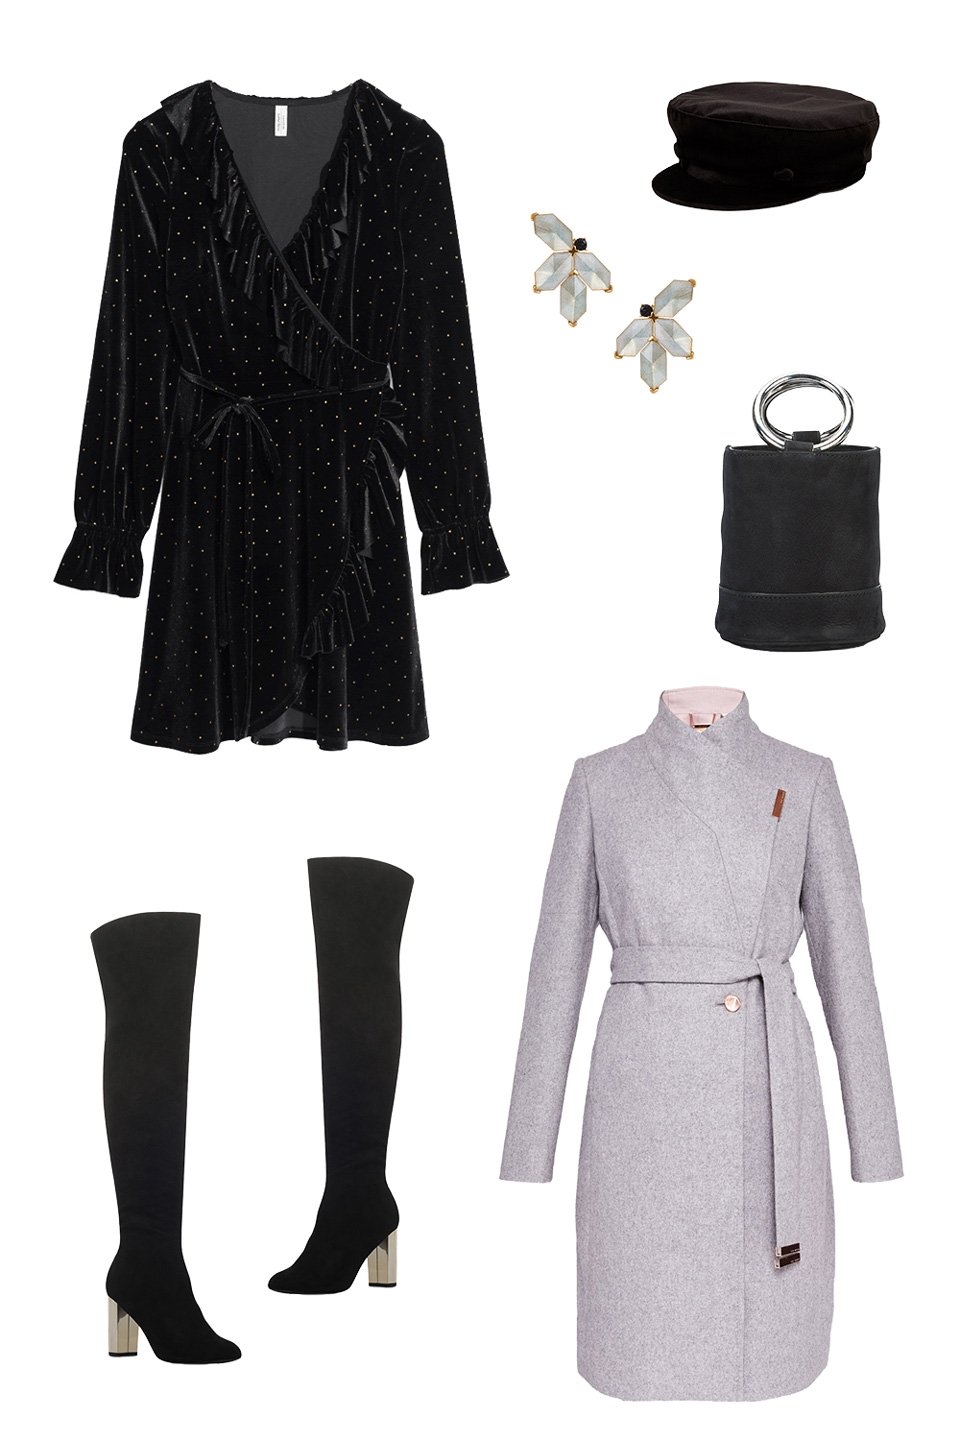 How To Dress For A Parisian Winter